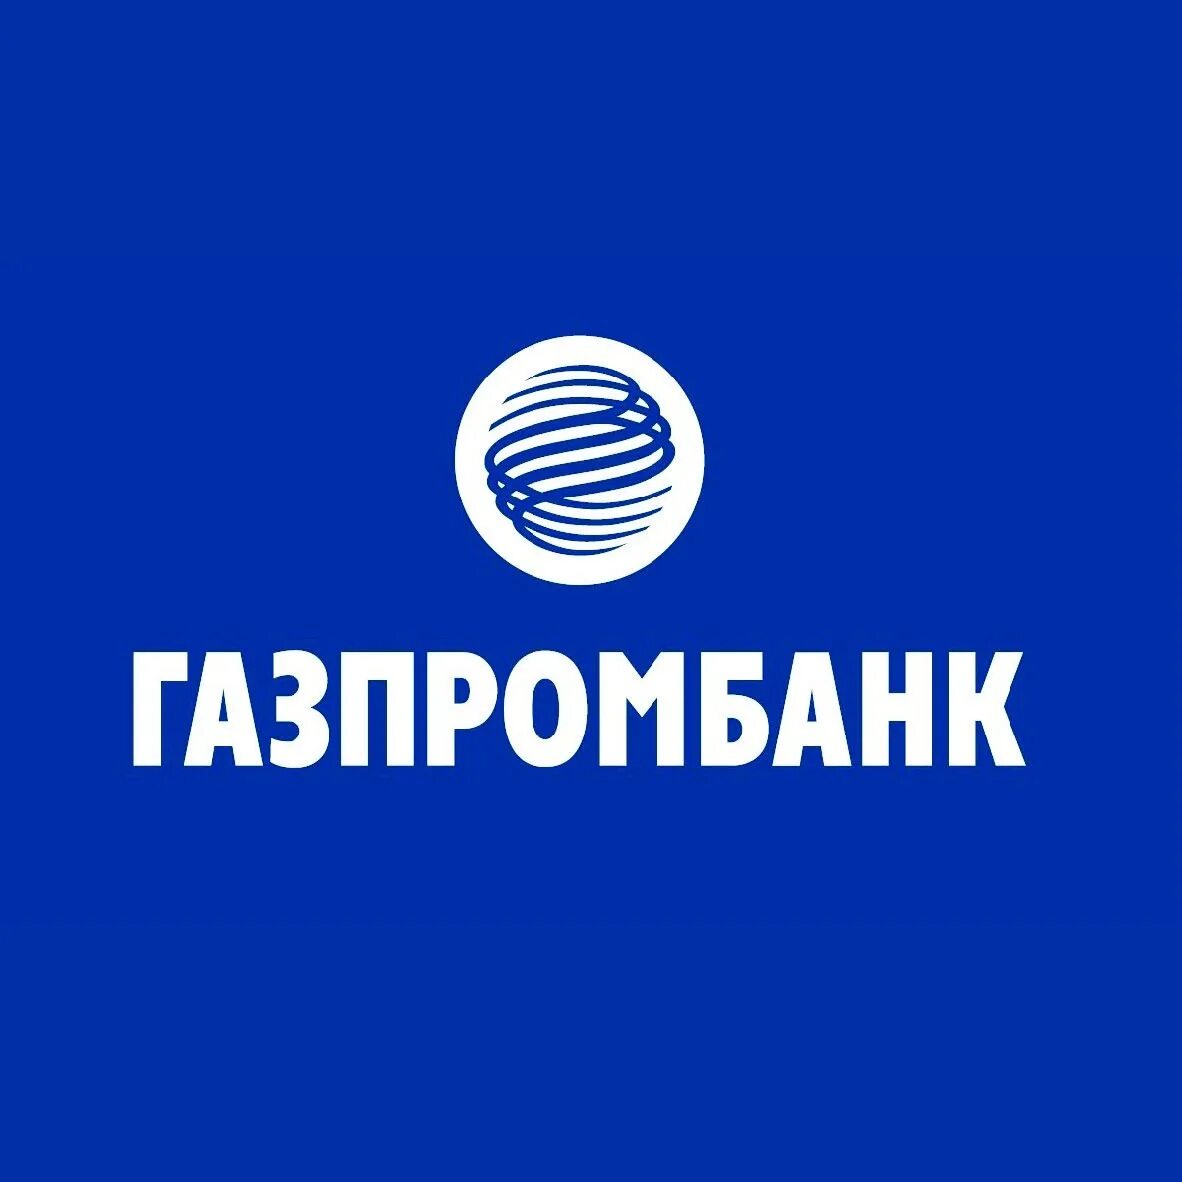 Банк новый логотип. Газпромбанк. Газпромбанк лого. Логотип банка Газпромбанк. Газпромбанк новый логт.